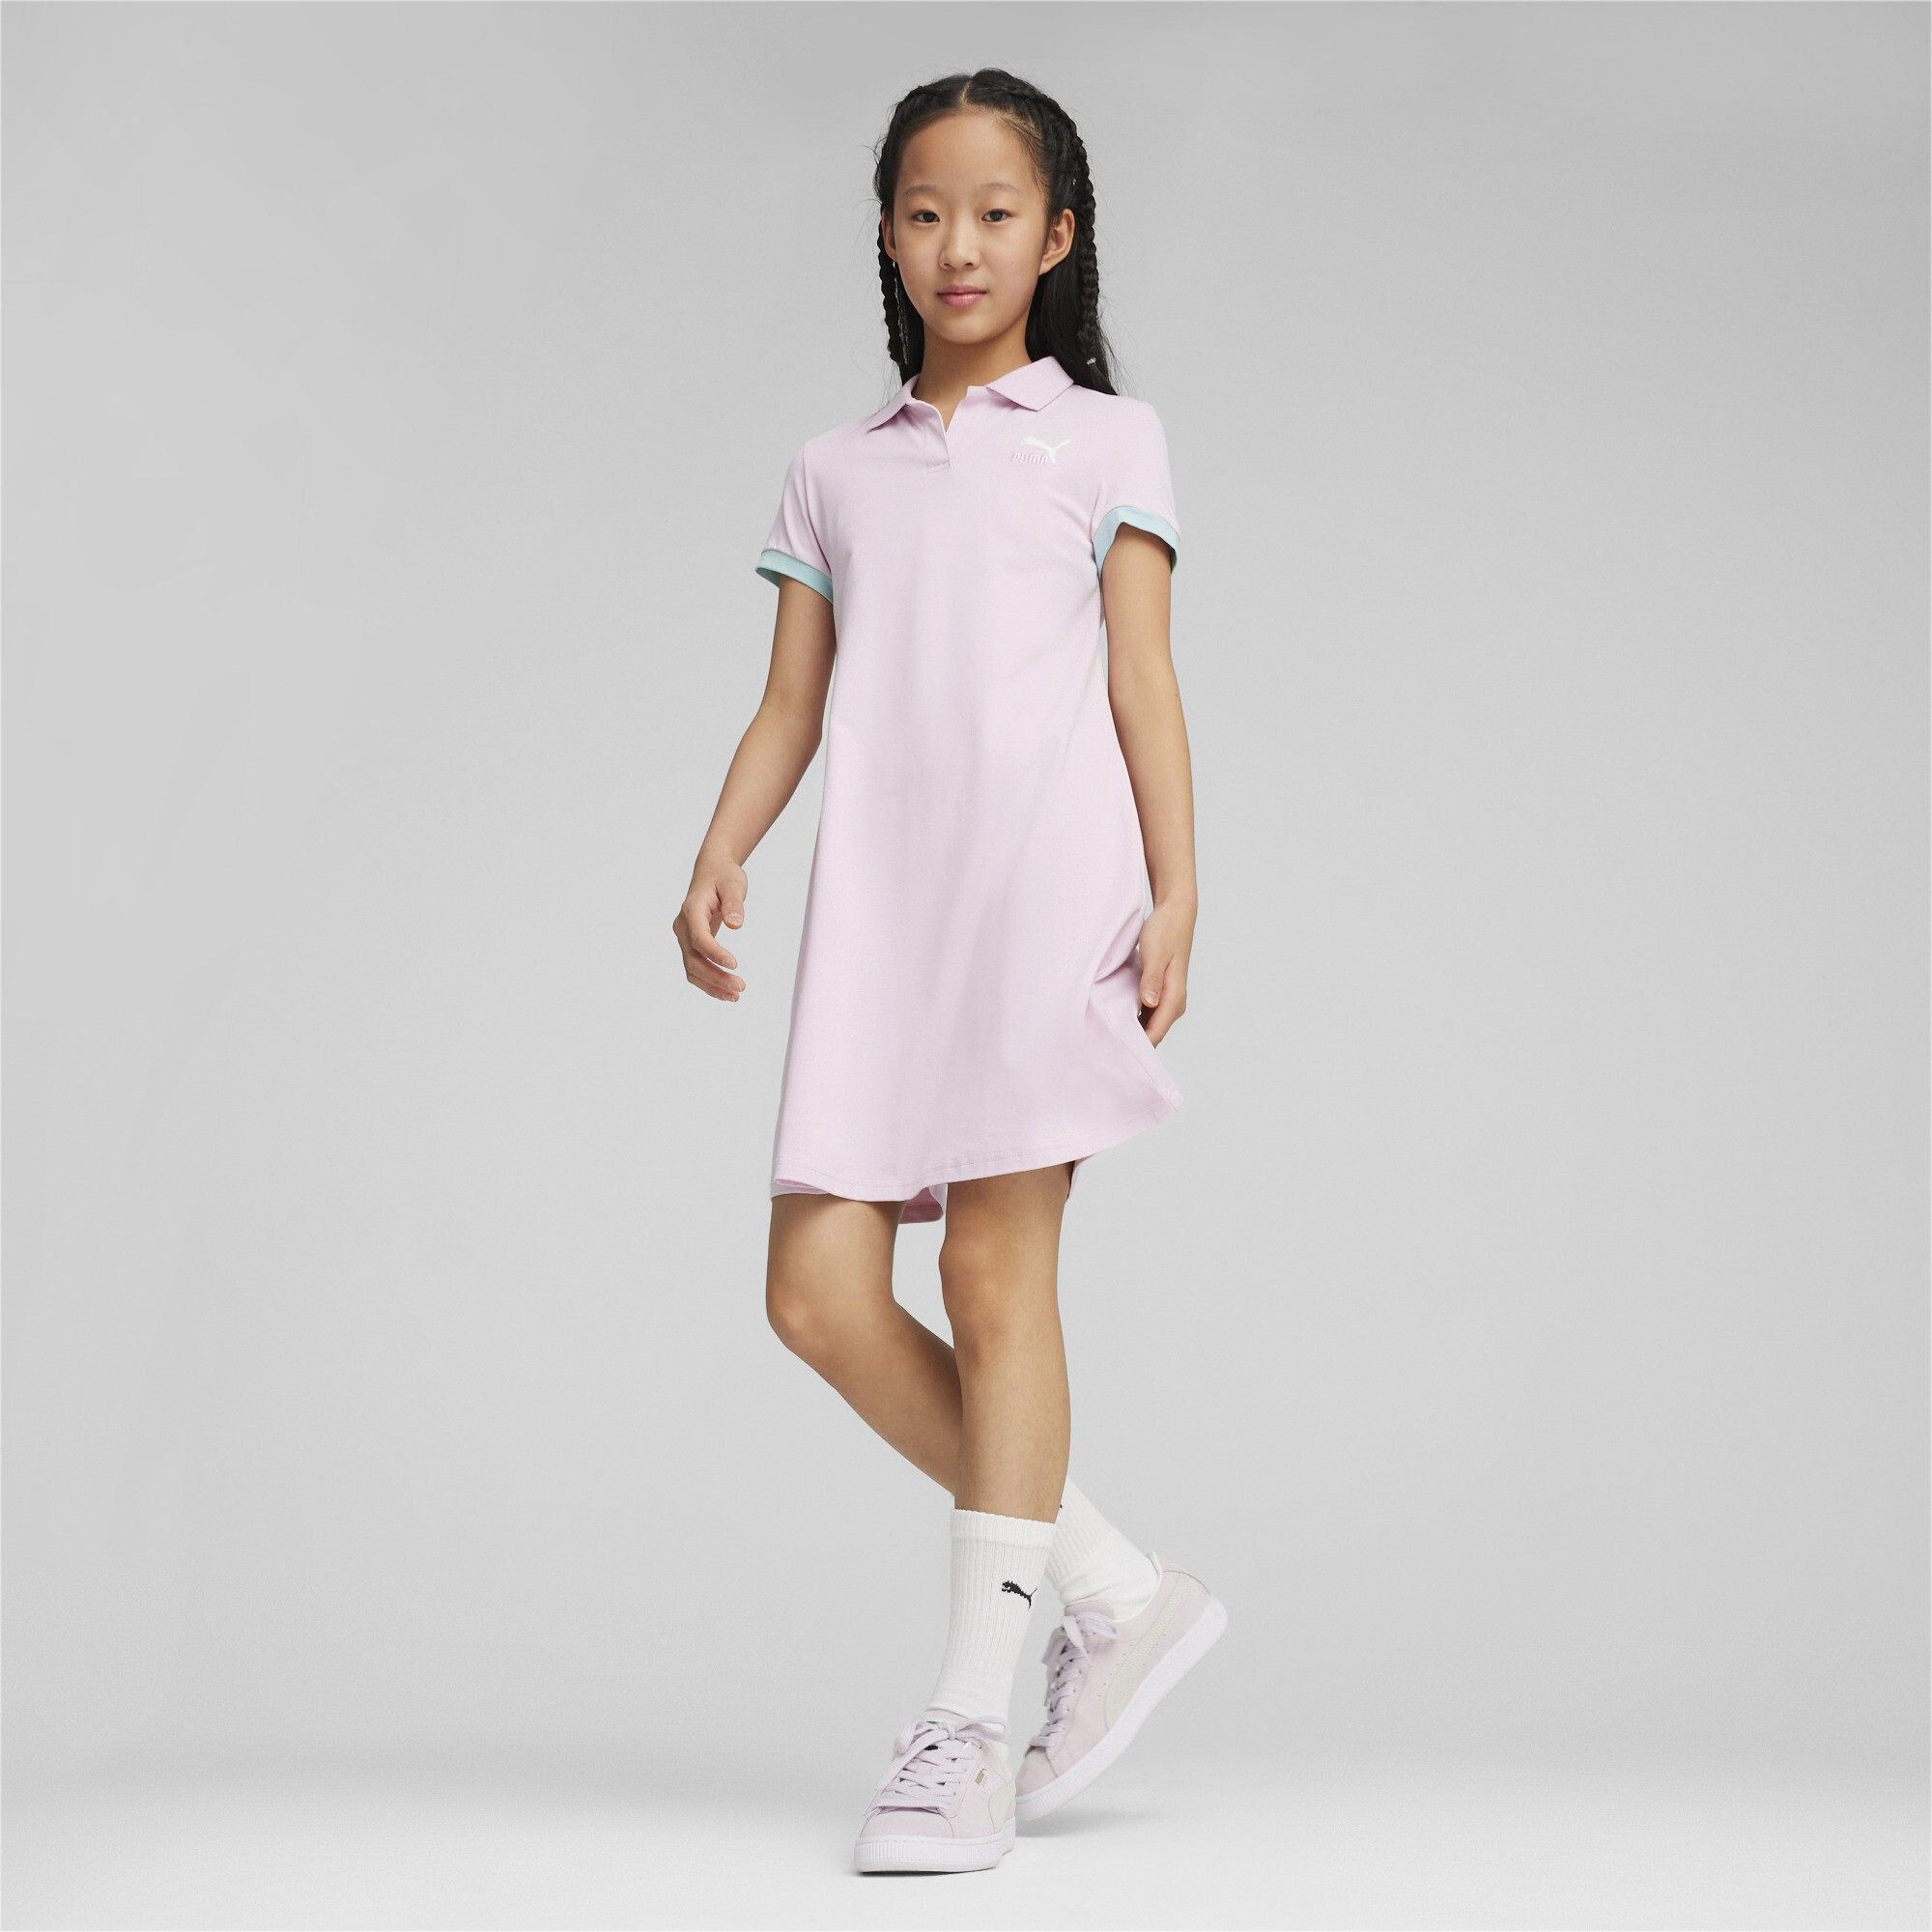 PUMA CLASSICS Match Point Dress In 90 - Purple, Size 11-12 Youth